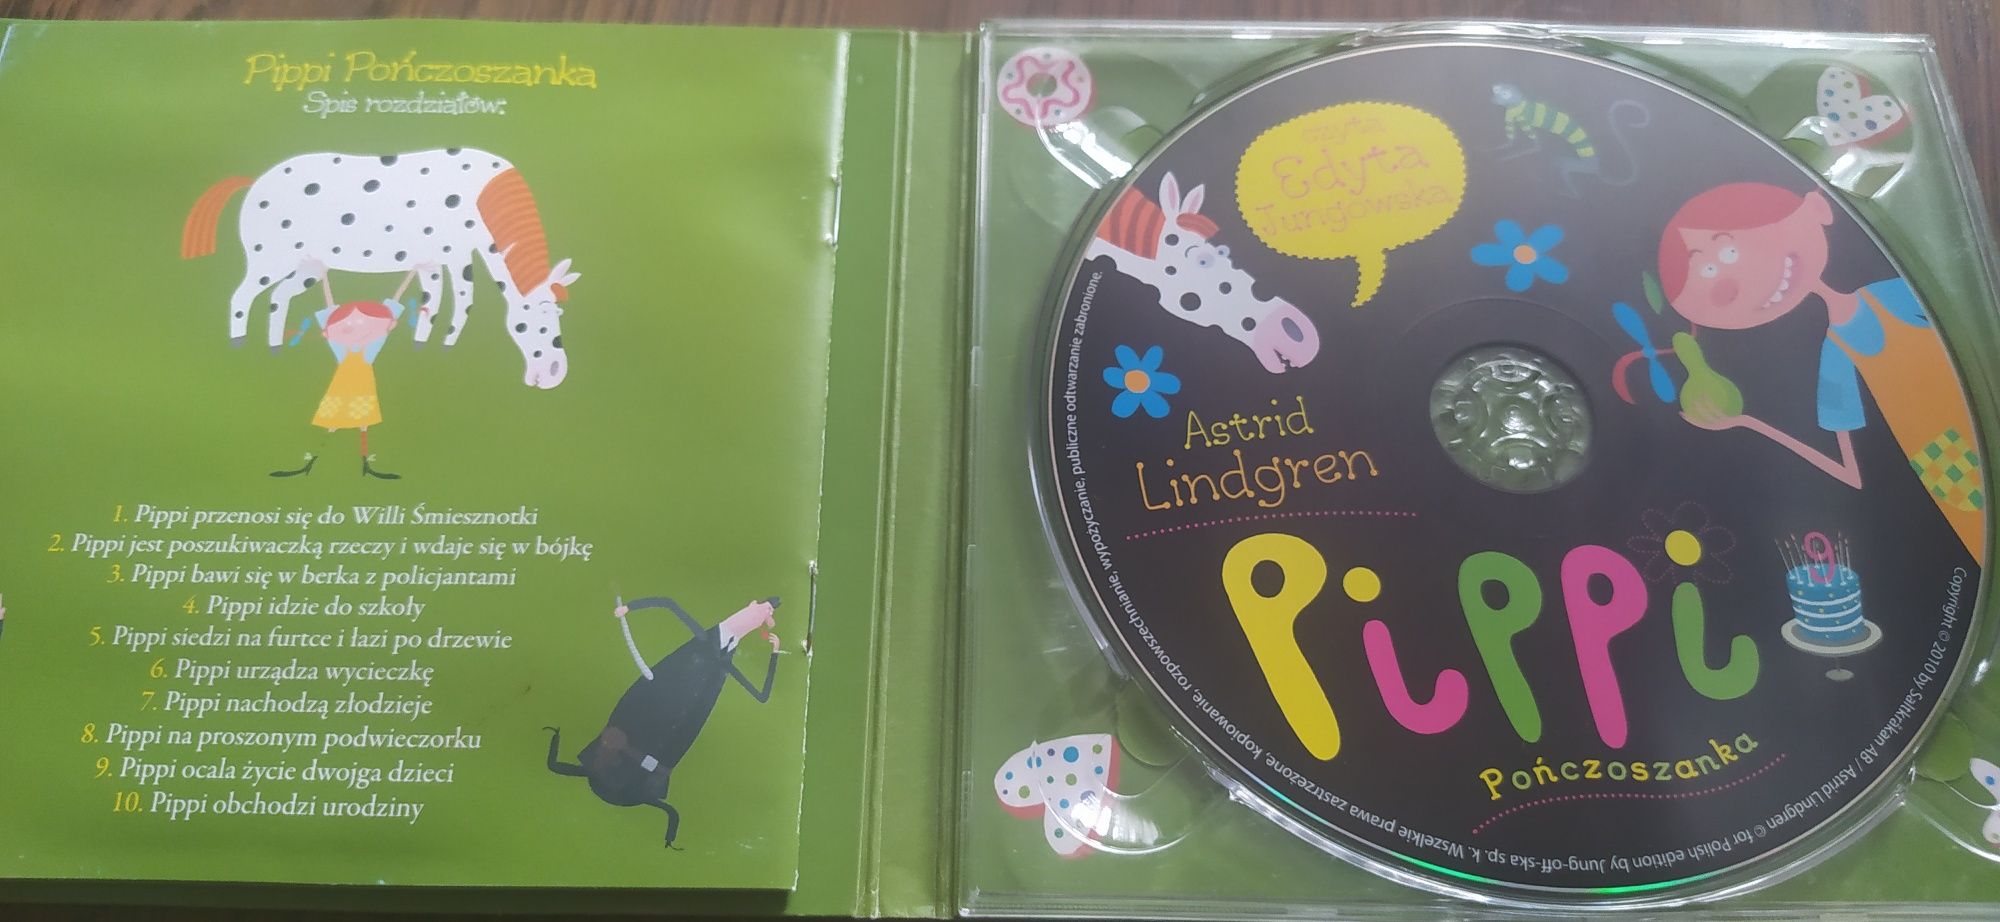 Astrid Lindgren Pippi Pończoszanka CD audiobook